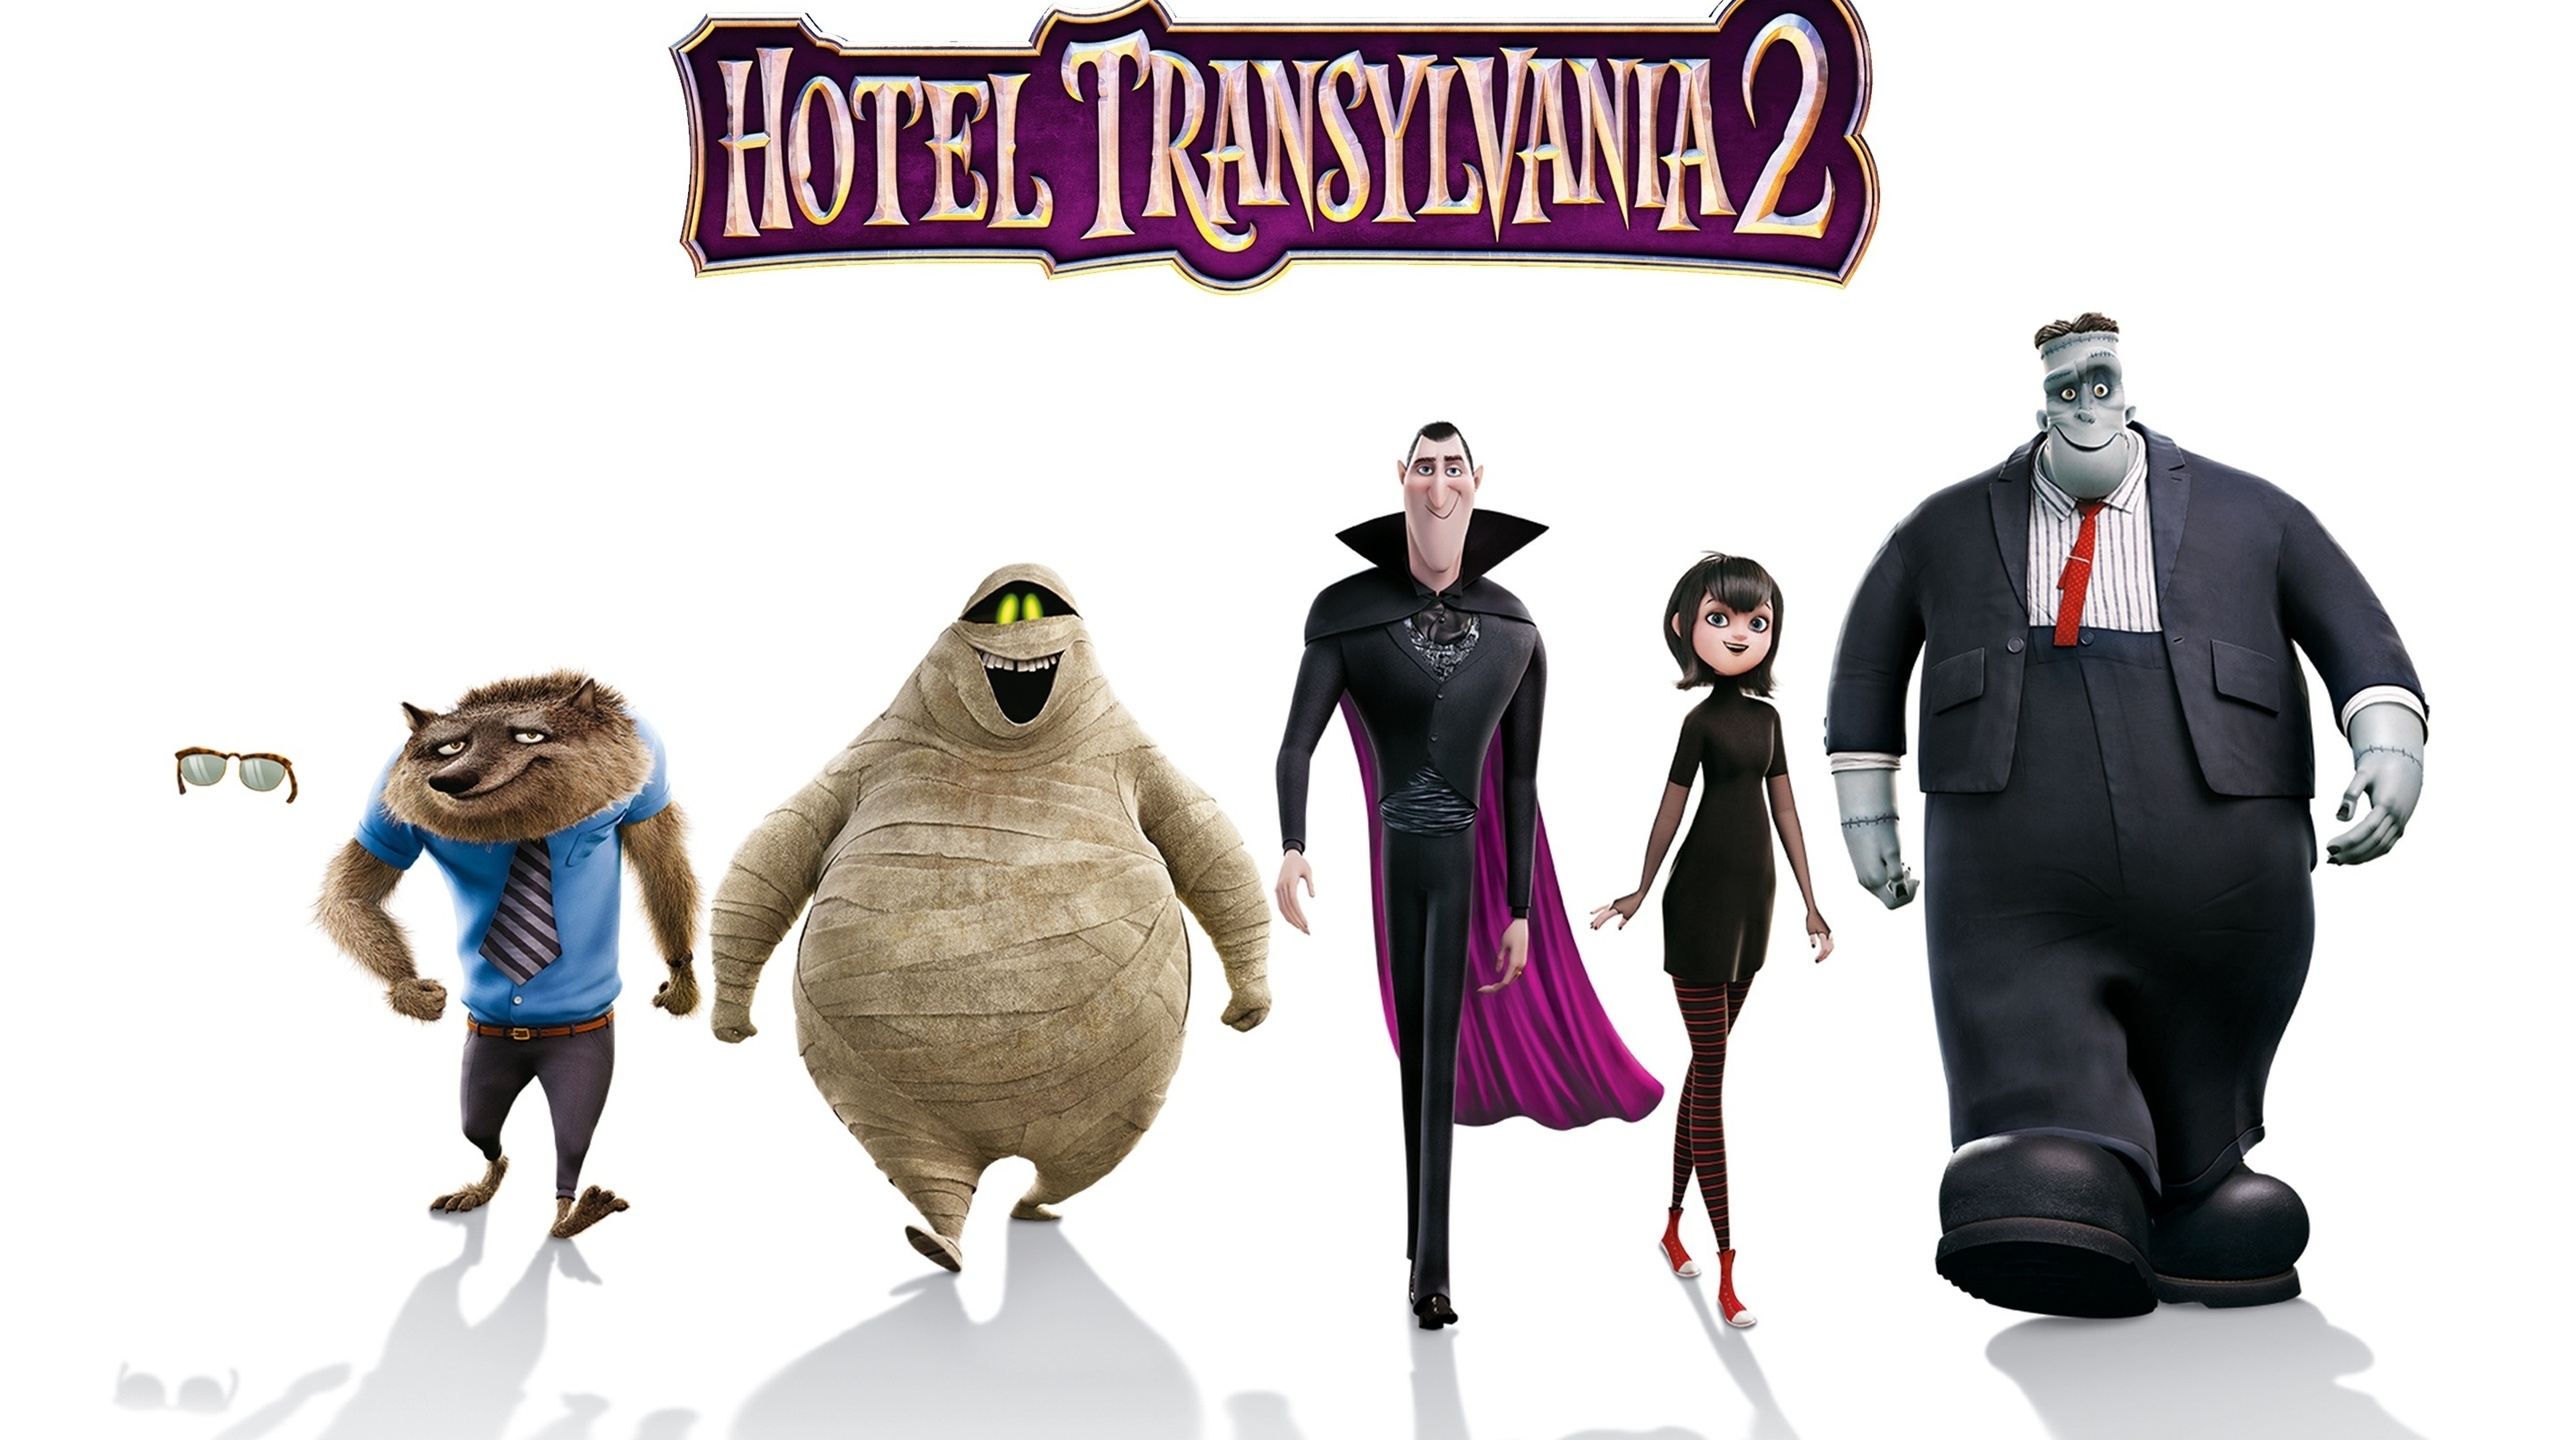 Hotel Transylvania 2 for 2560x1440 HDTV resolution